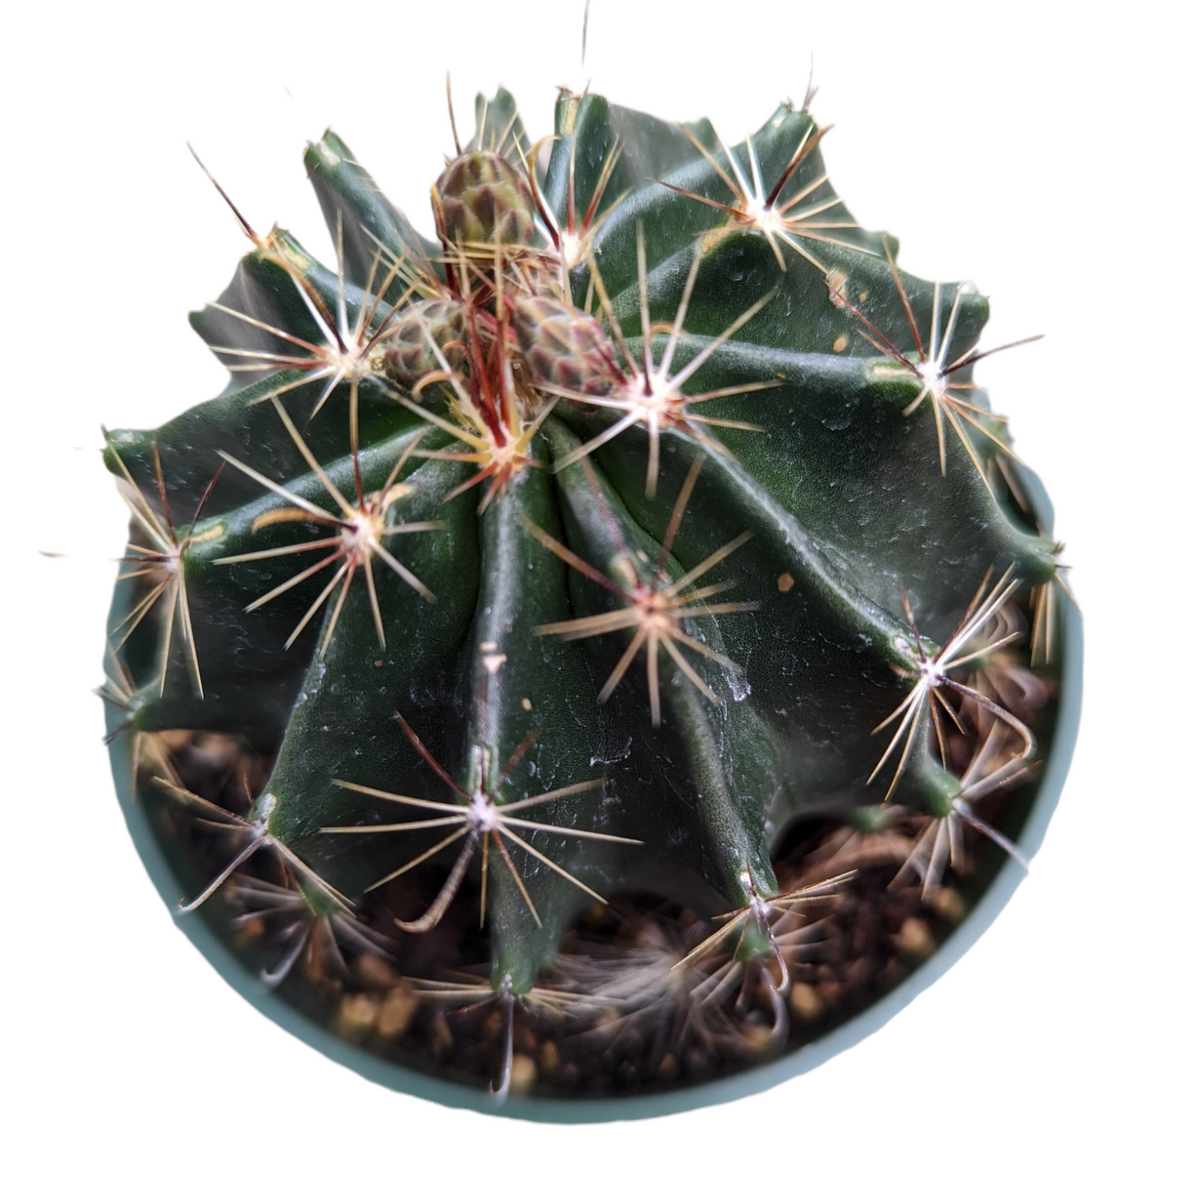 Ferocactus wislizeni ssp. herrerae - Twisted Barrel Cactus